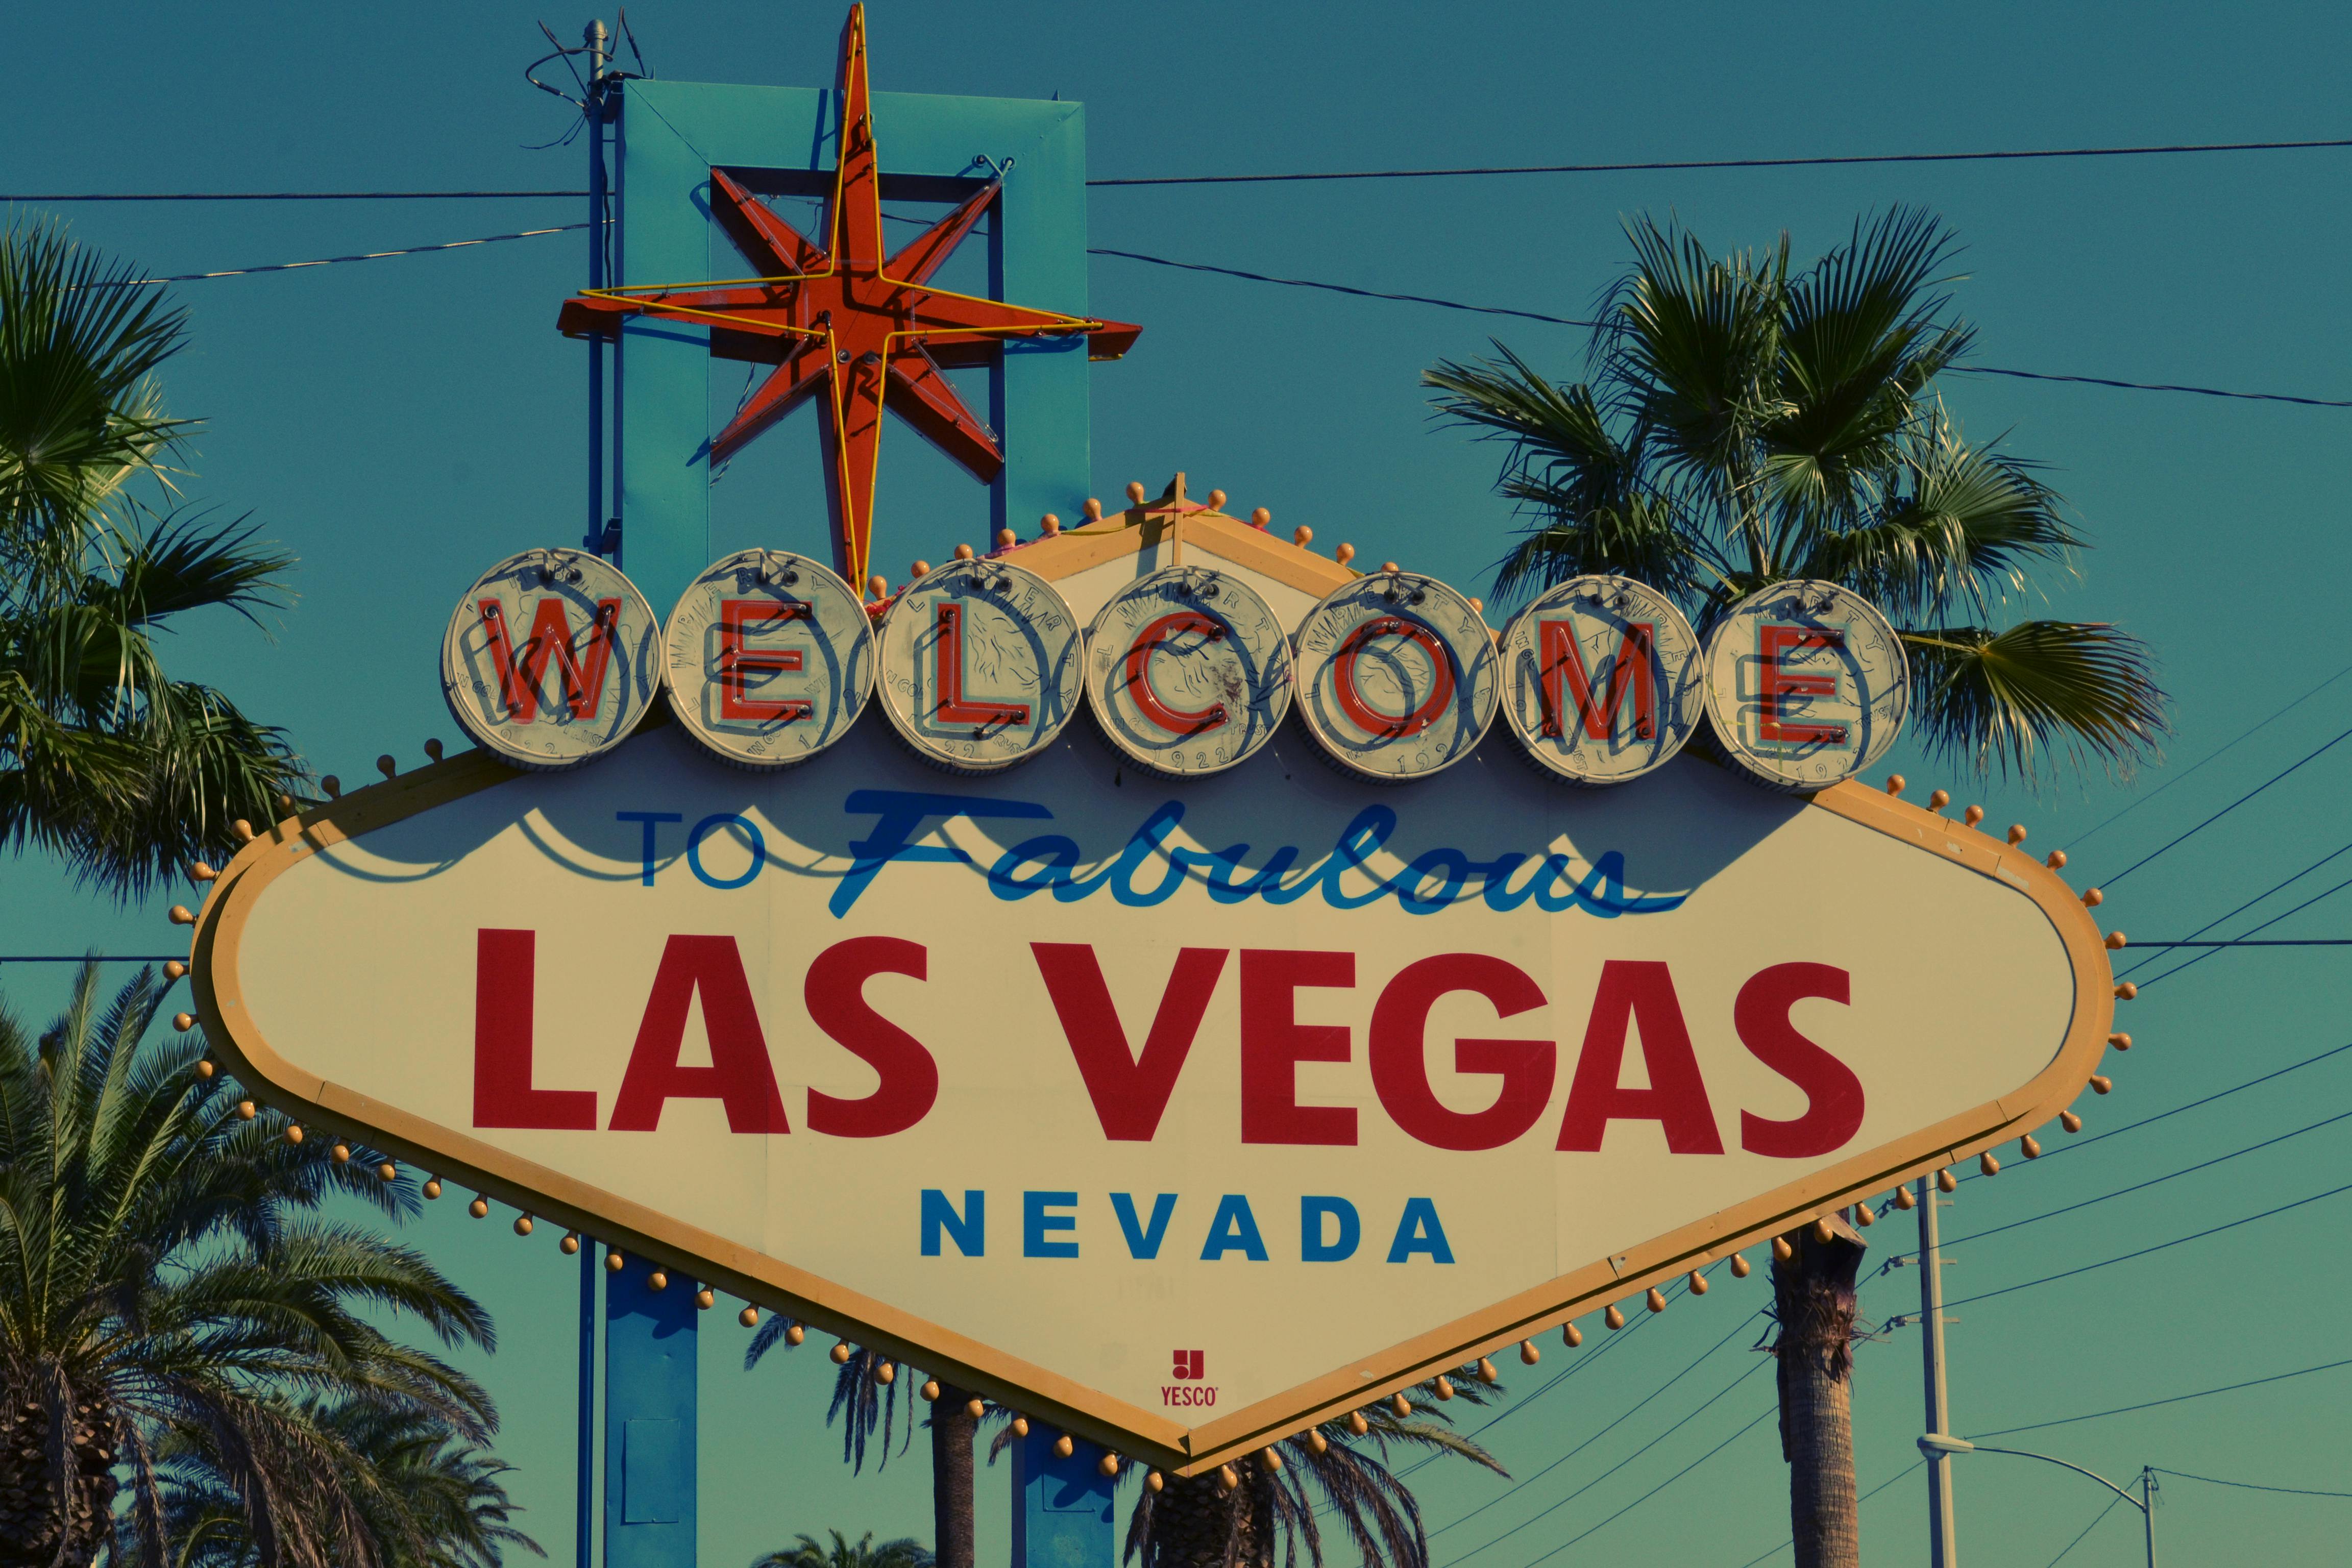 Welcome to Fabulous Las Vegas Nevada Signage · Free Stock Photo